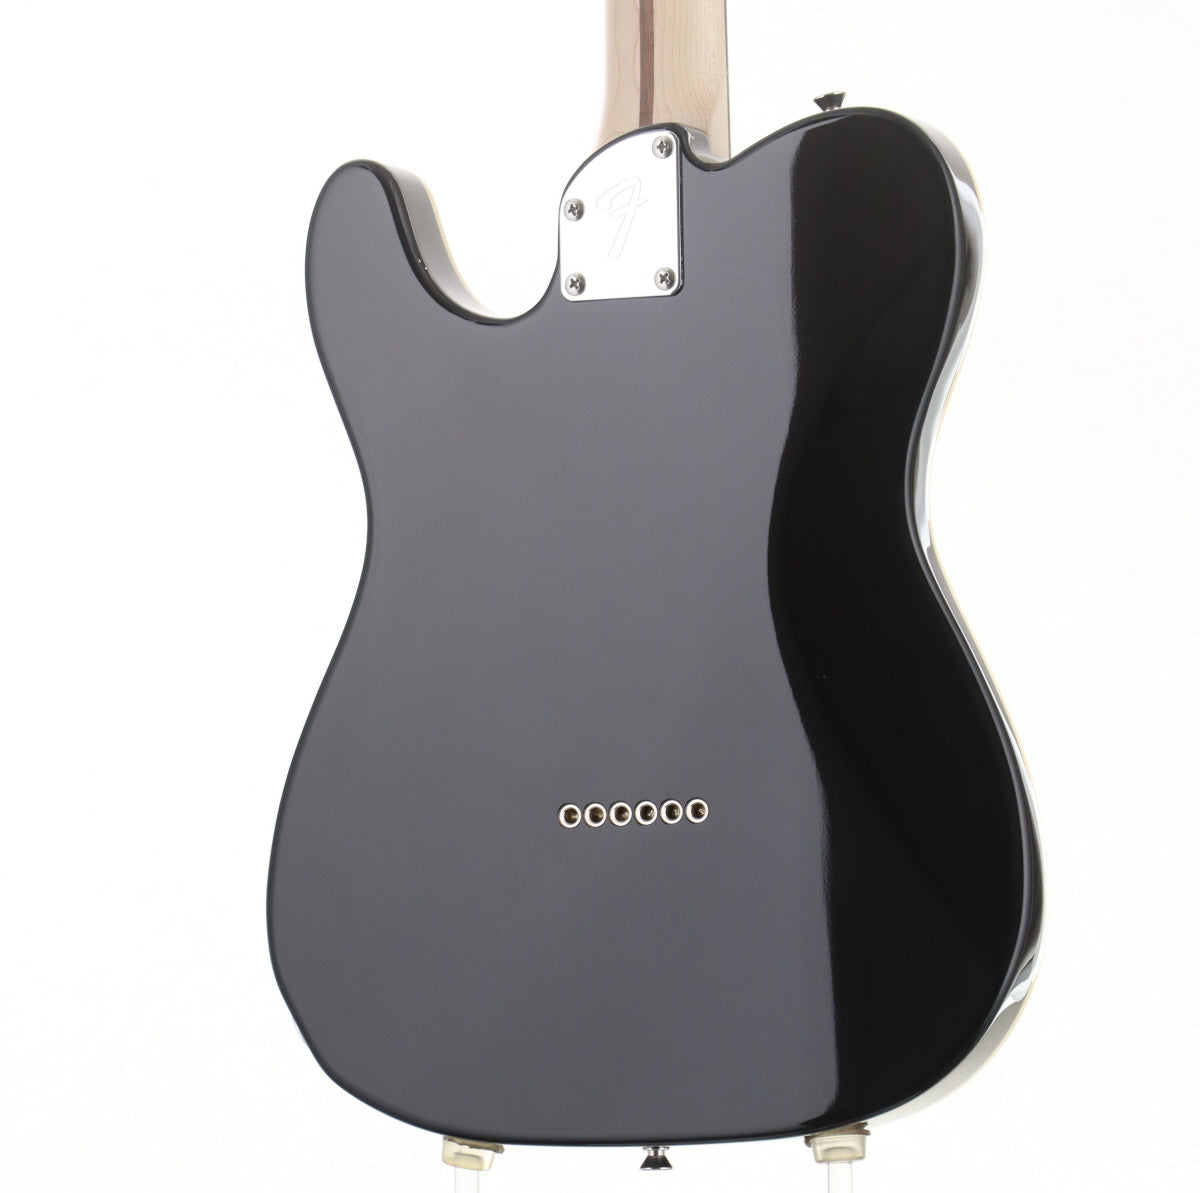 [SN JD20002177] USED Fender / Made in Japan Modern Telecaster Black [03]